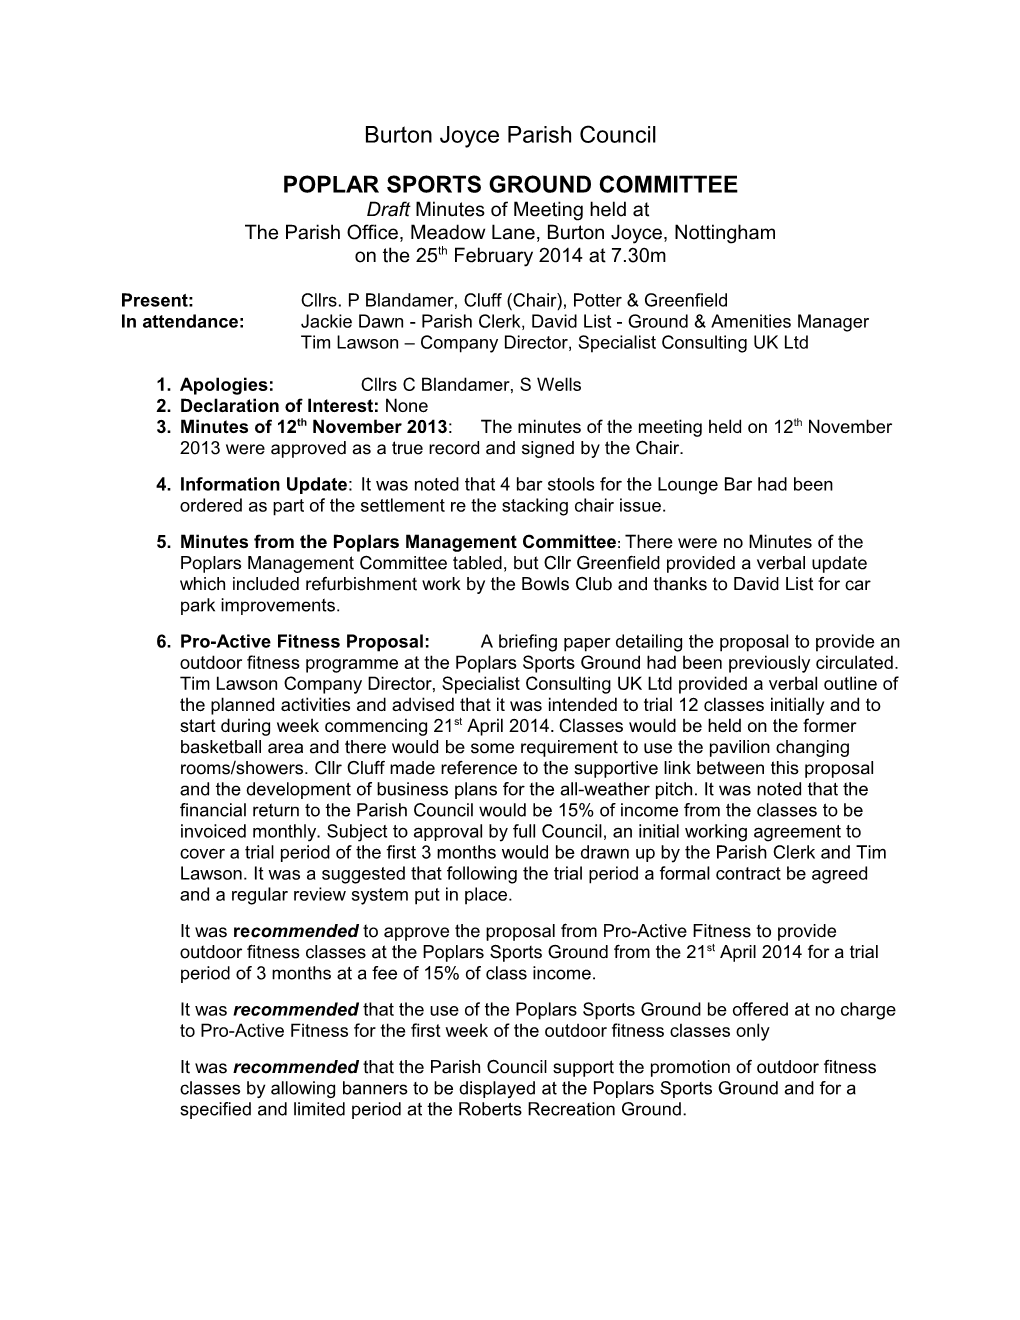 Poplar Sports Ground Committee